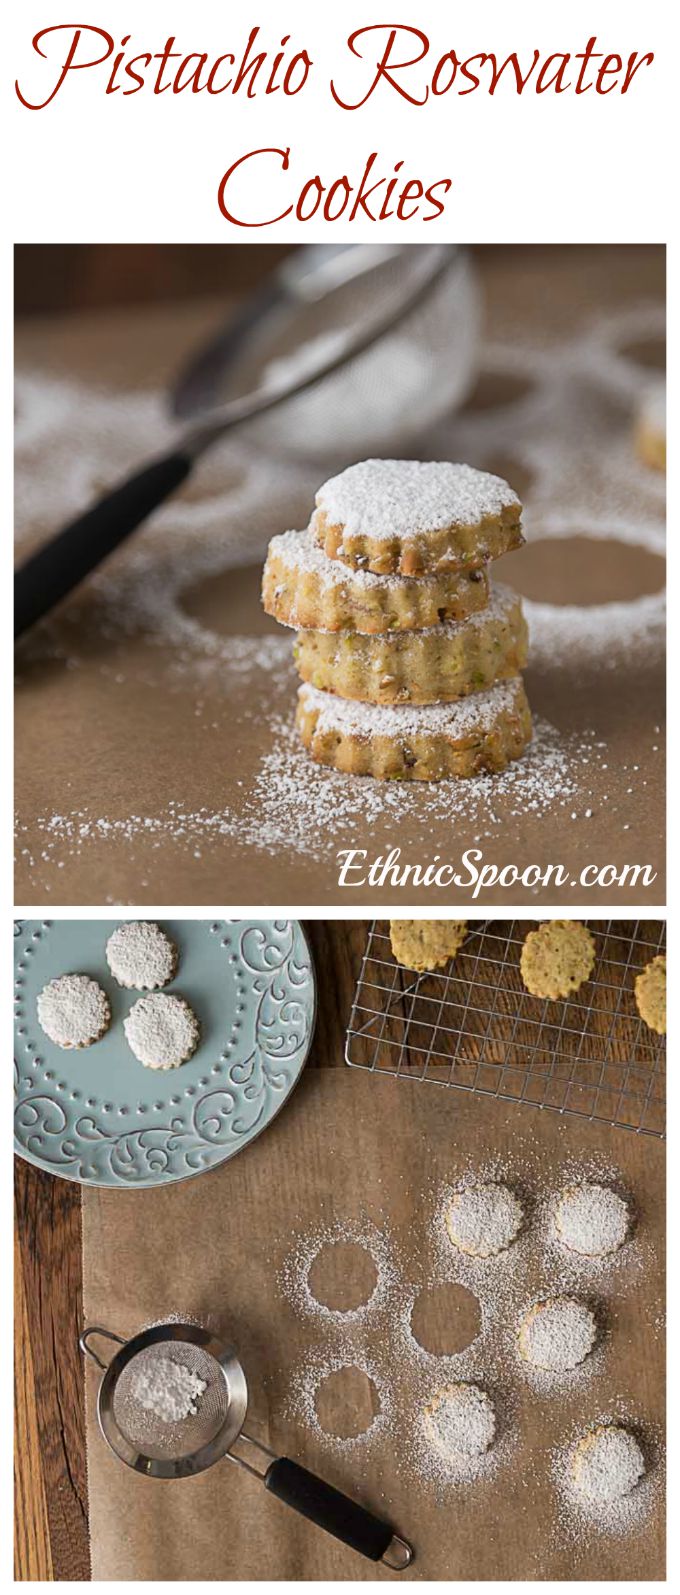 Pistachio Rosewater Cookies - Analida's Ethnic Spoon